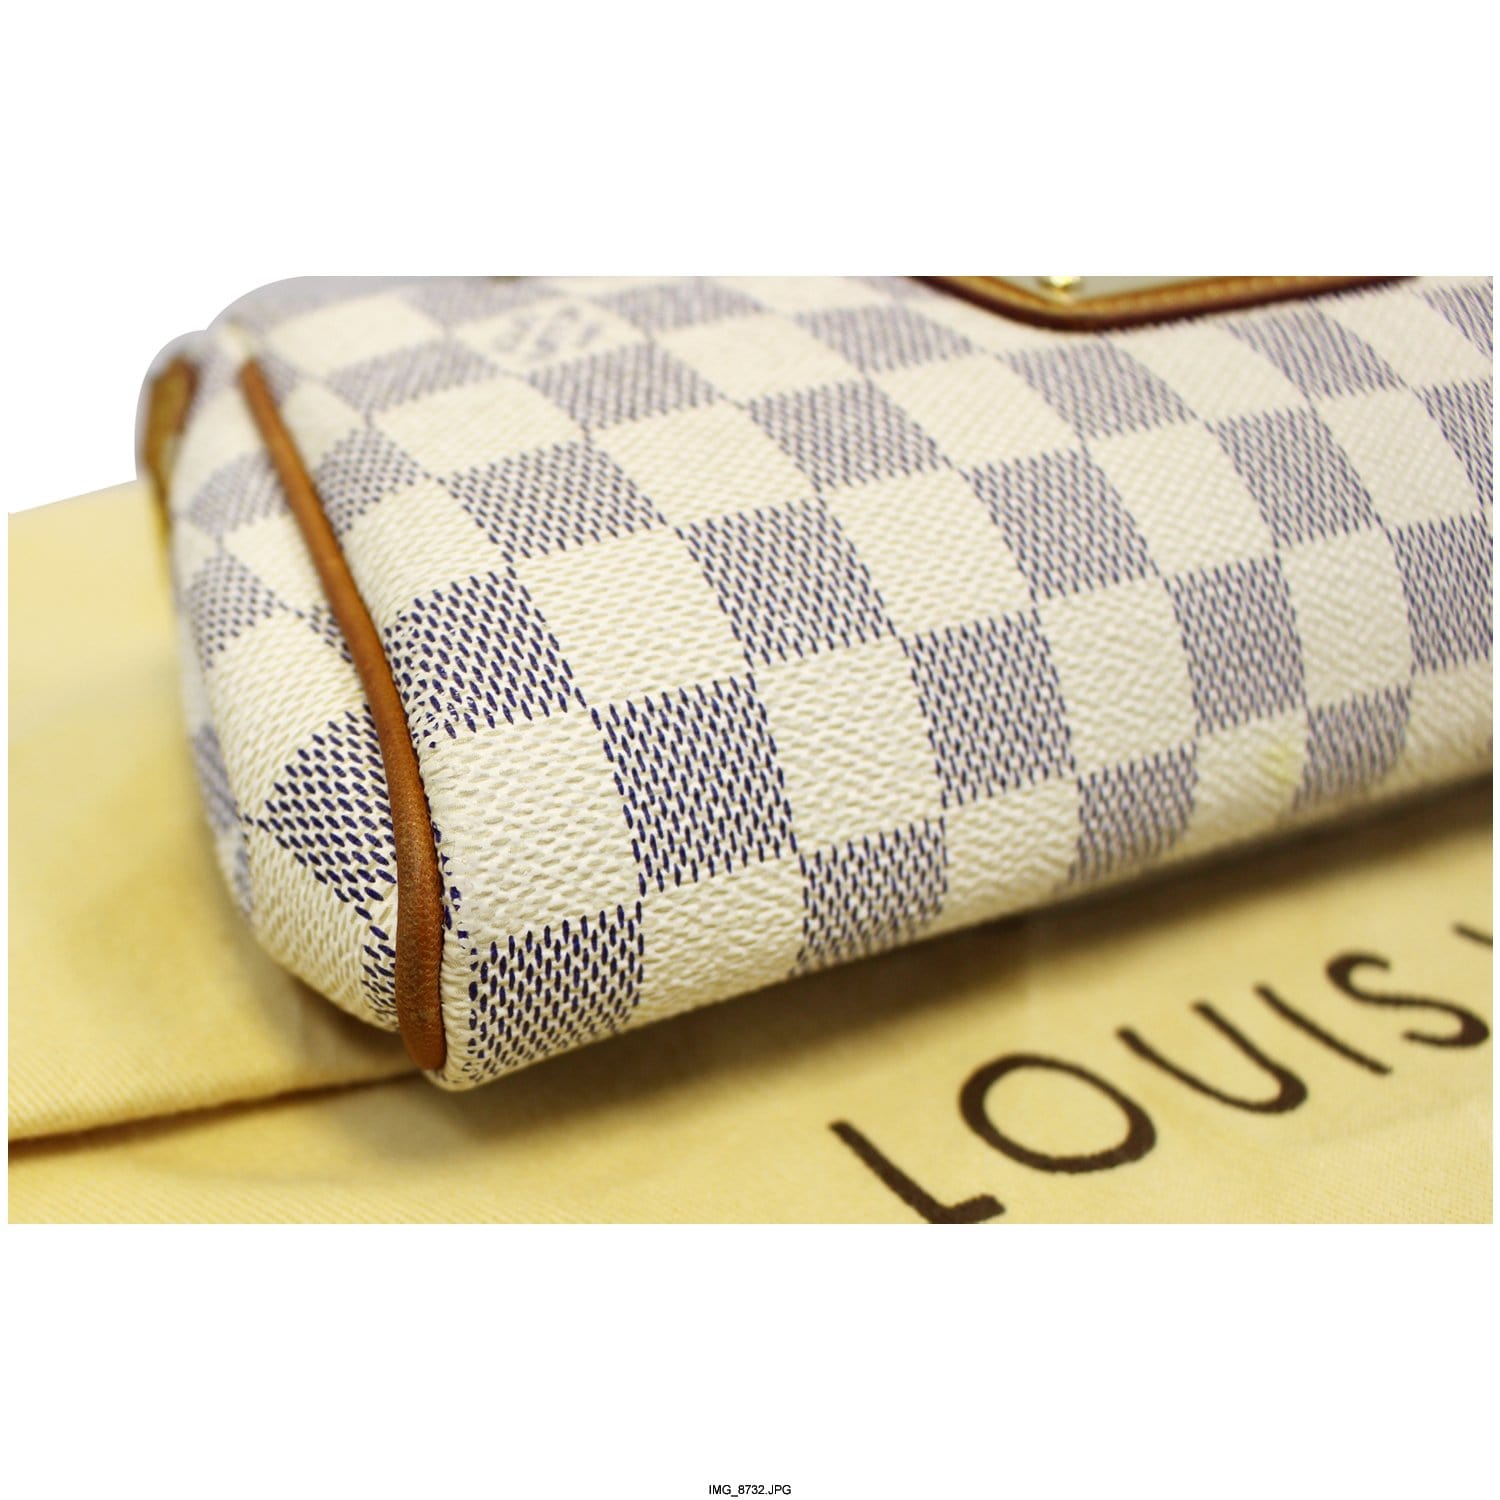 Louis Vuitton Eva Shoulder bag 322848